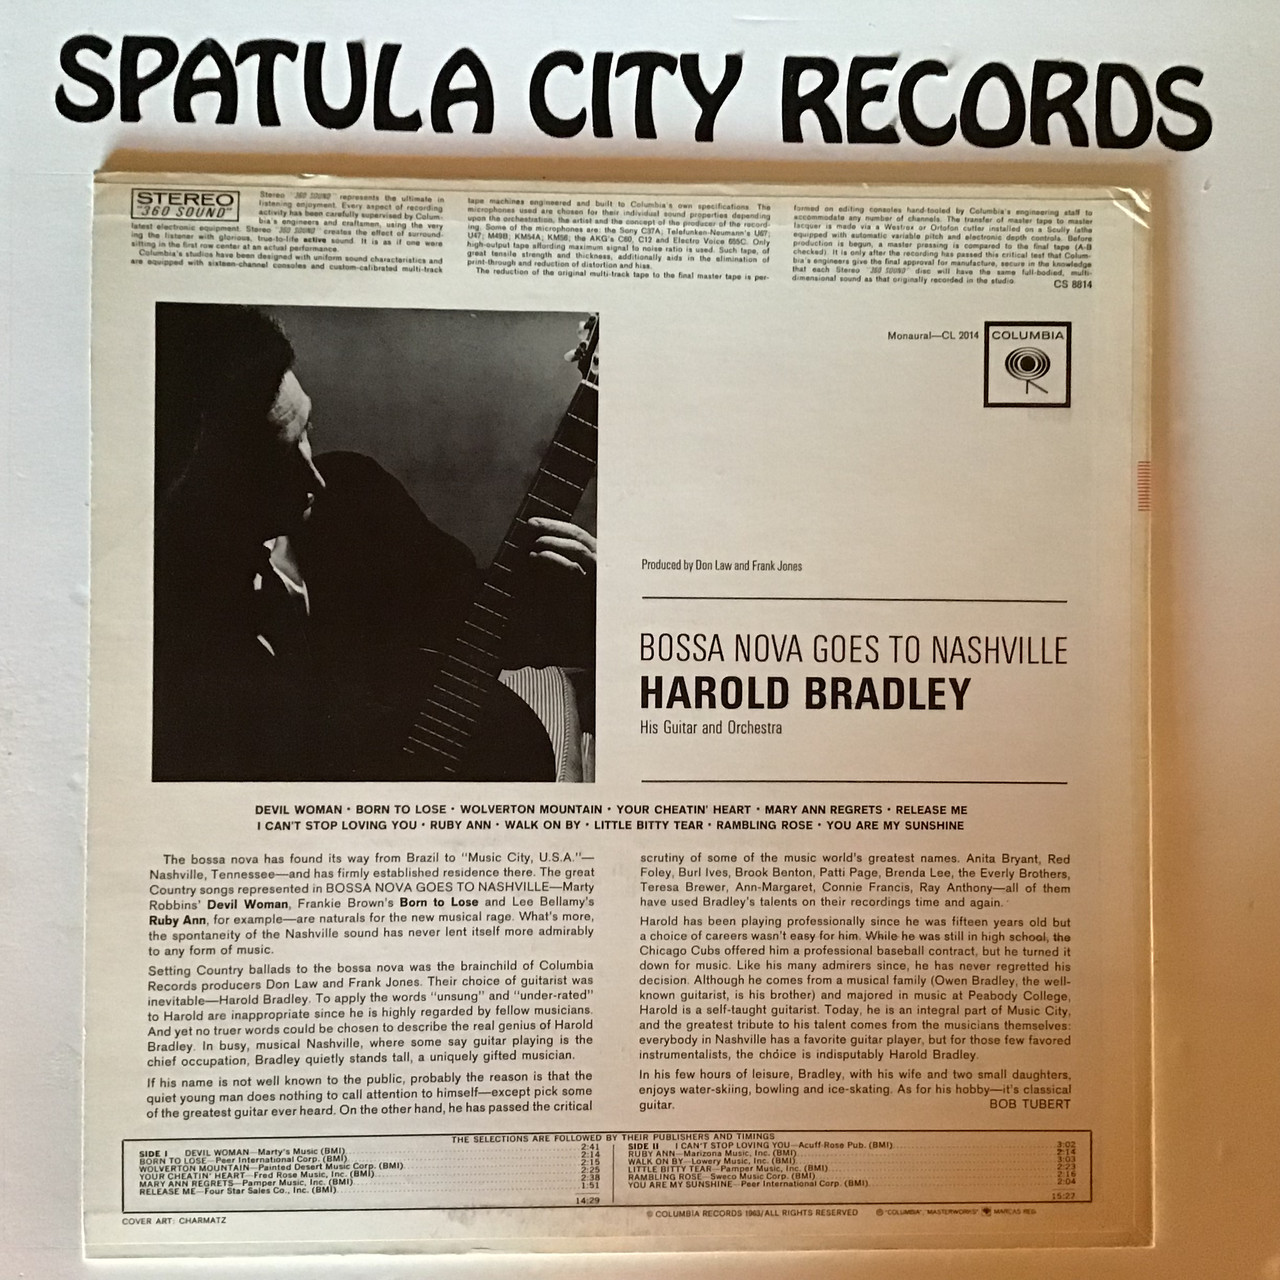 Harold Bradley His Guitar and Orchestra - Bossa Nova Goes to Nashville - vinyl record album LP